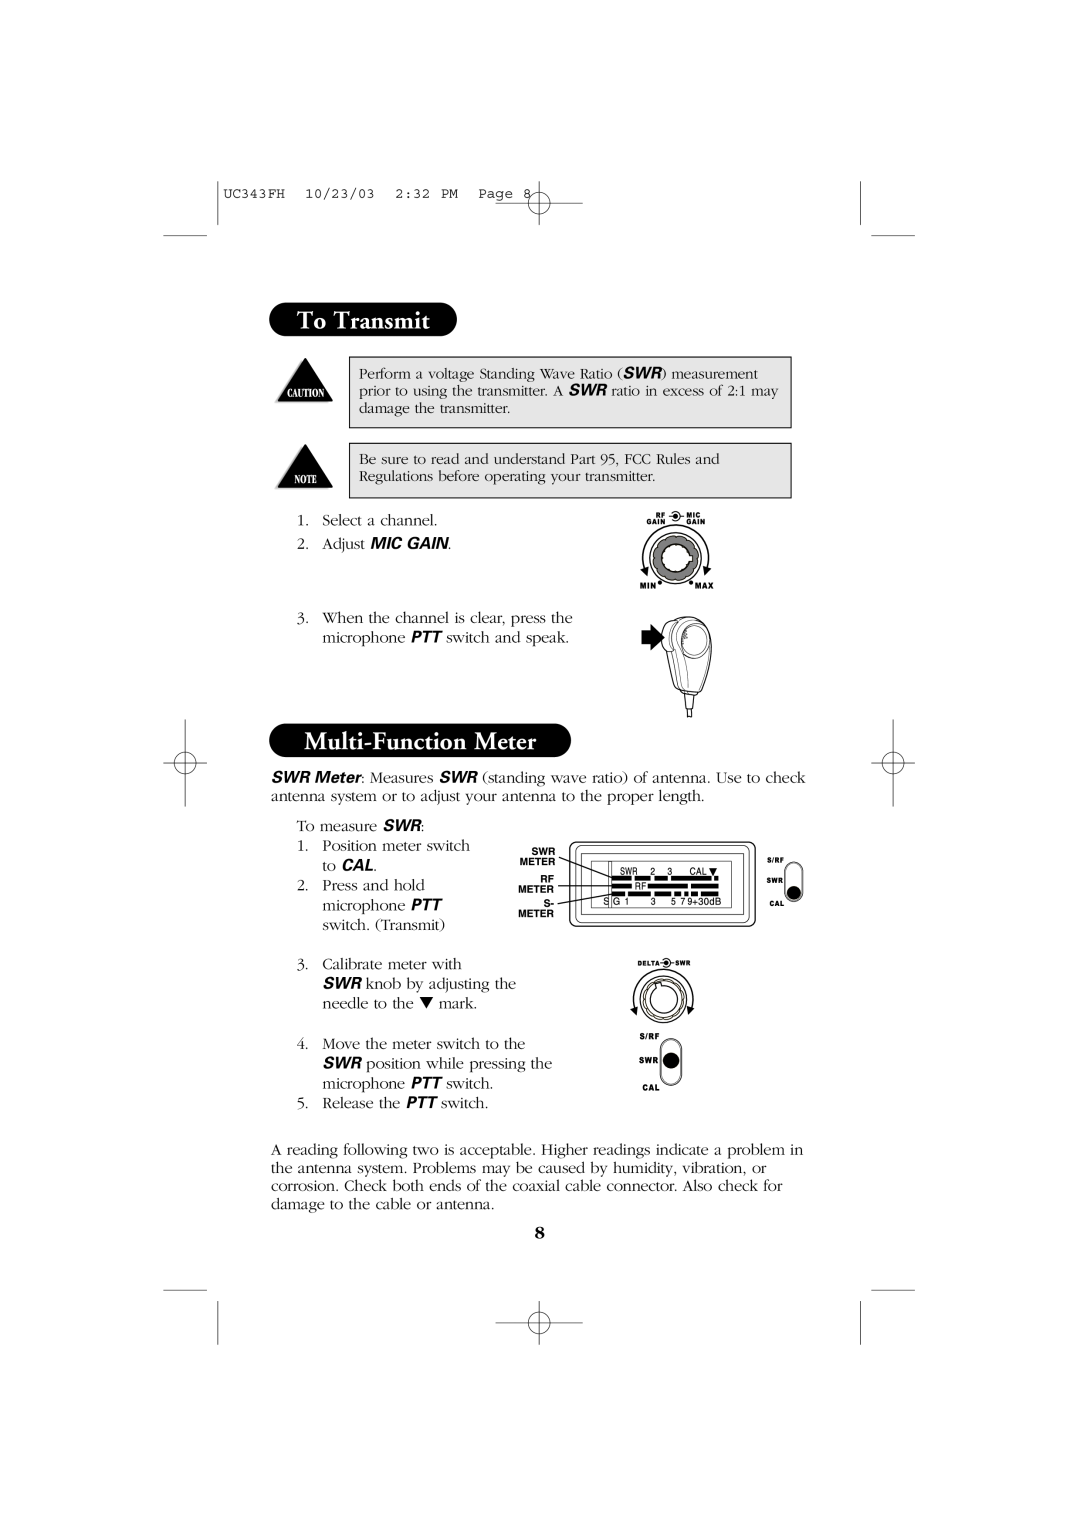 Uniden PC78 manual To Transmit, Multi-FunctionMeter 